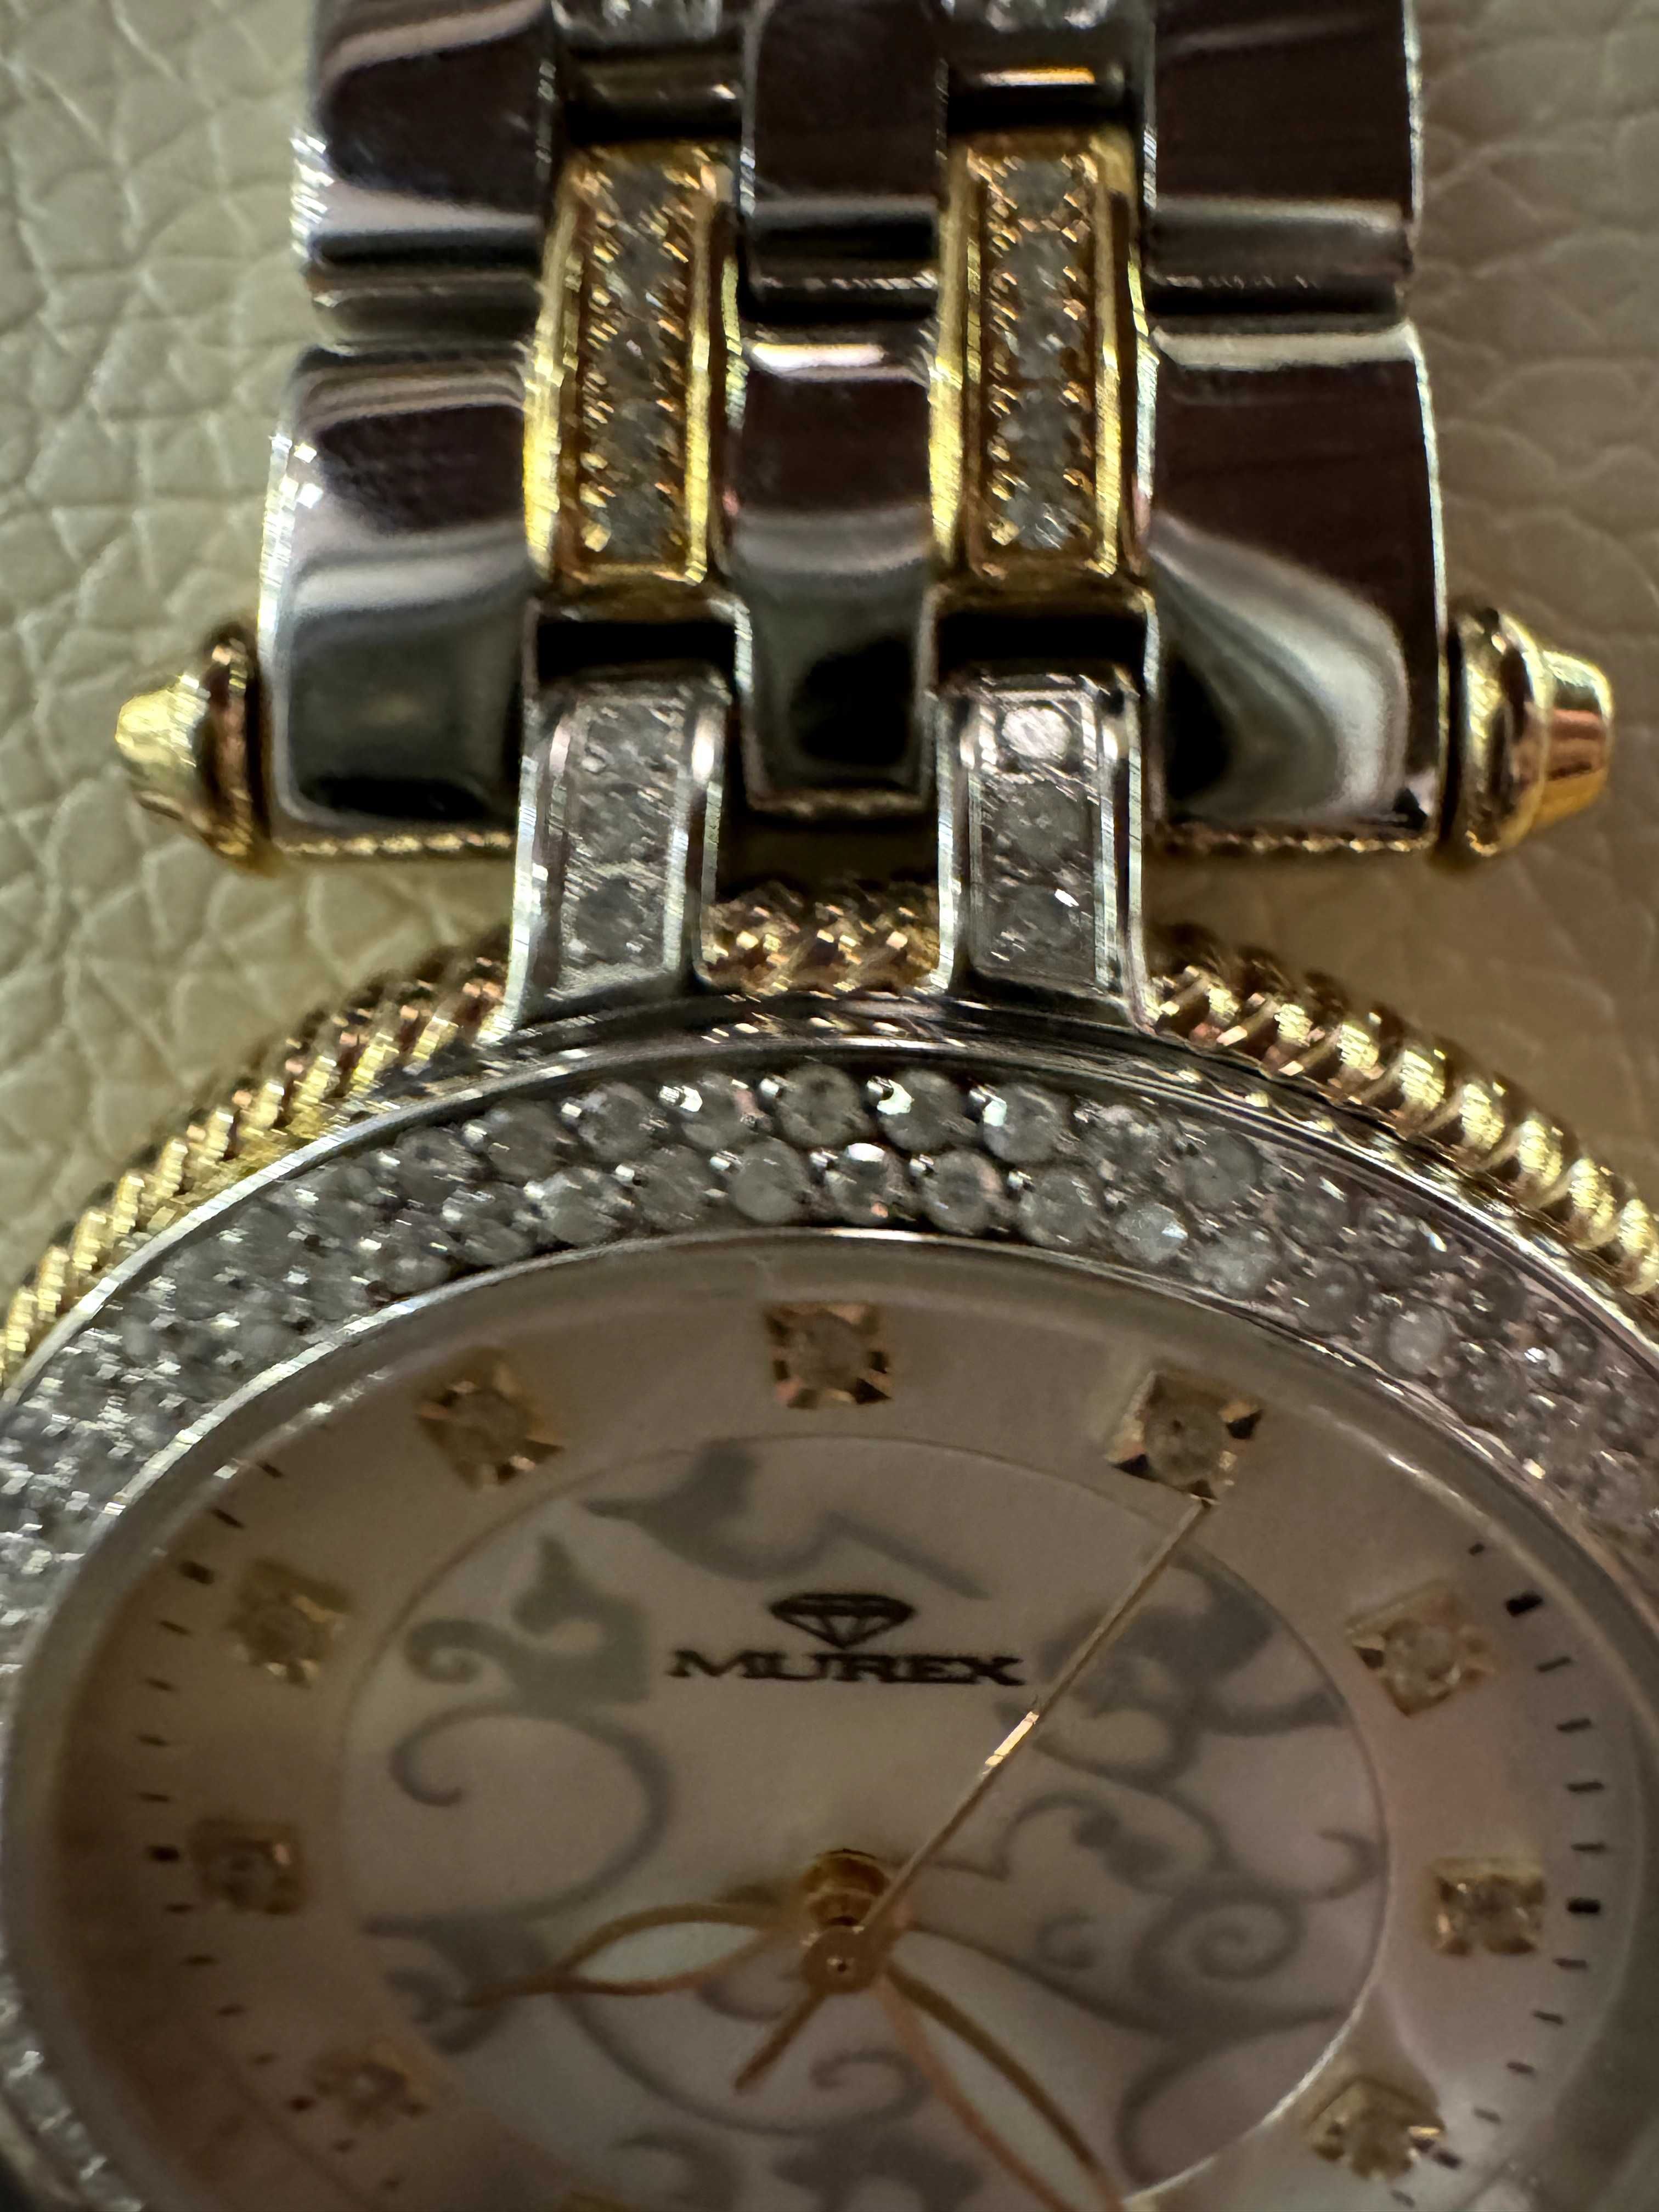 Murex Swiss Diamond - relógio de luxo